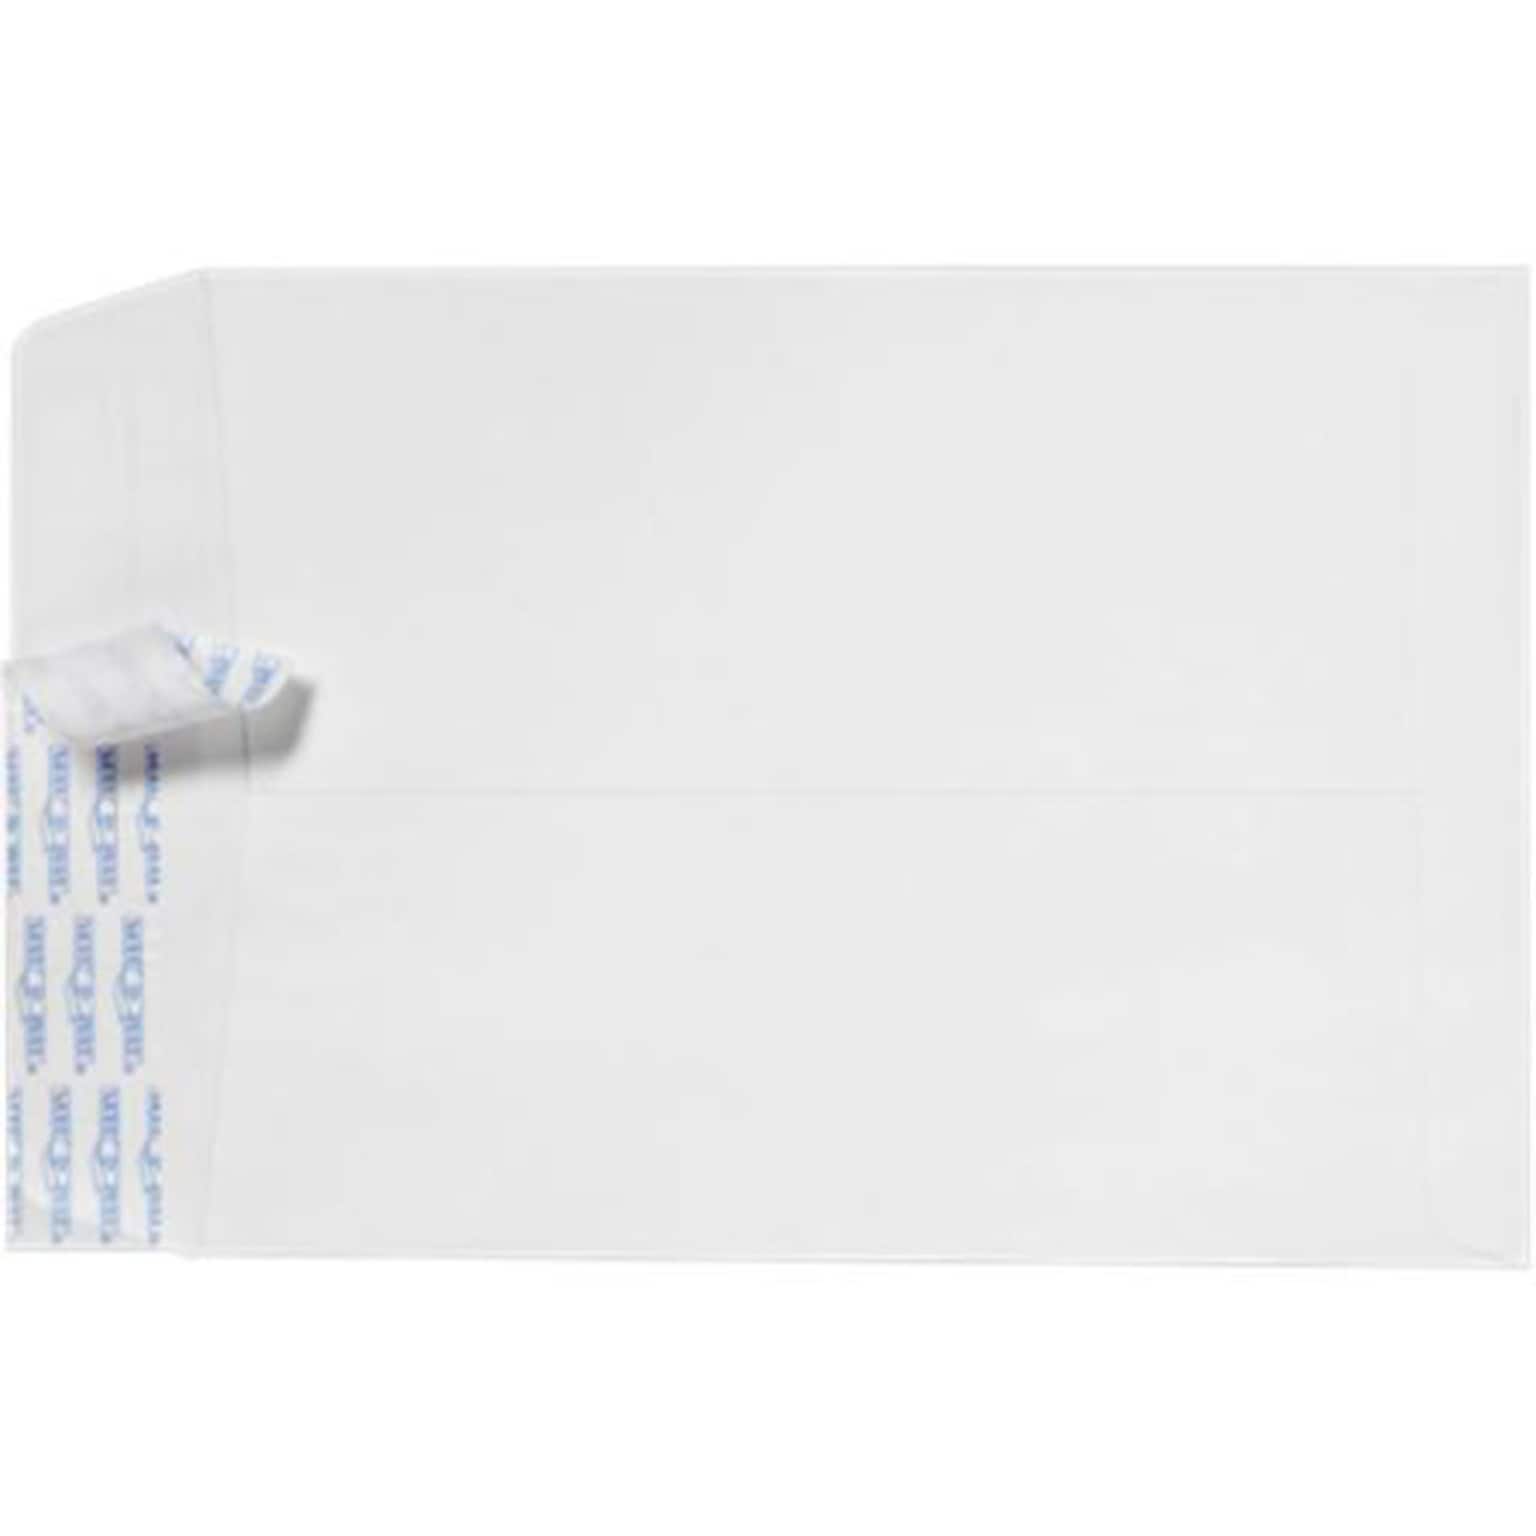 JAM Paper Self Seal Business Envelope, 10 x 13, White, 500 Pack (75423-500)